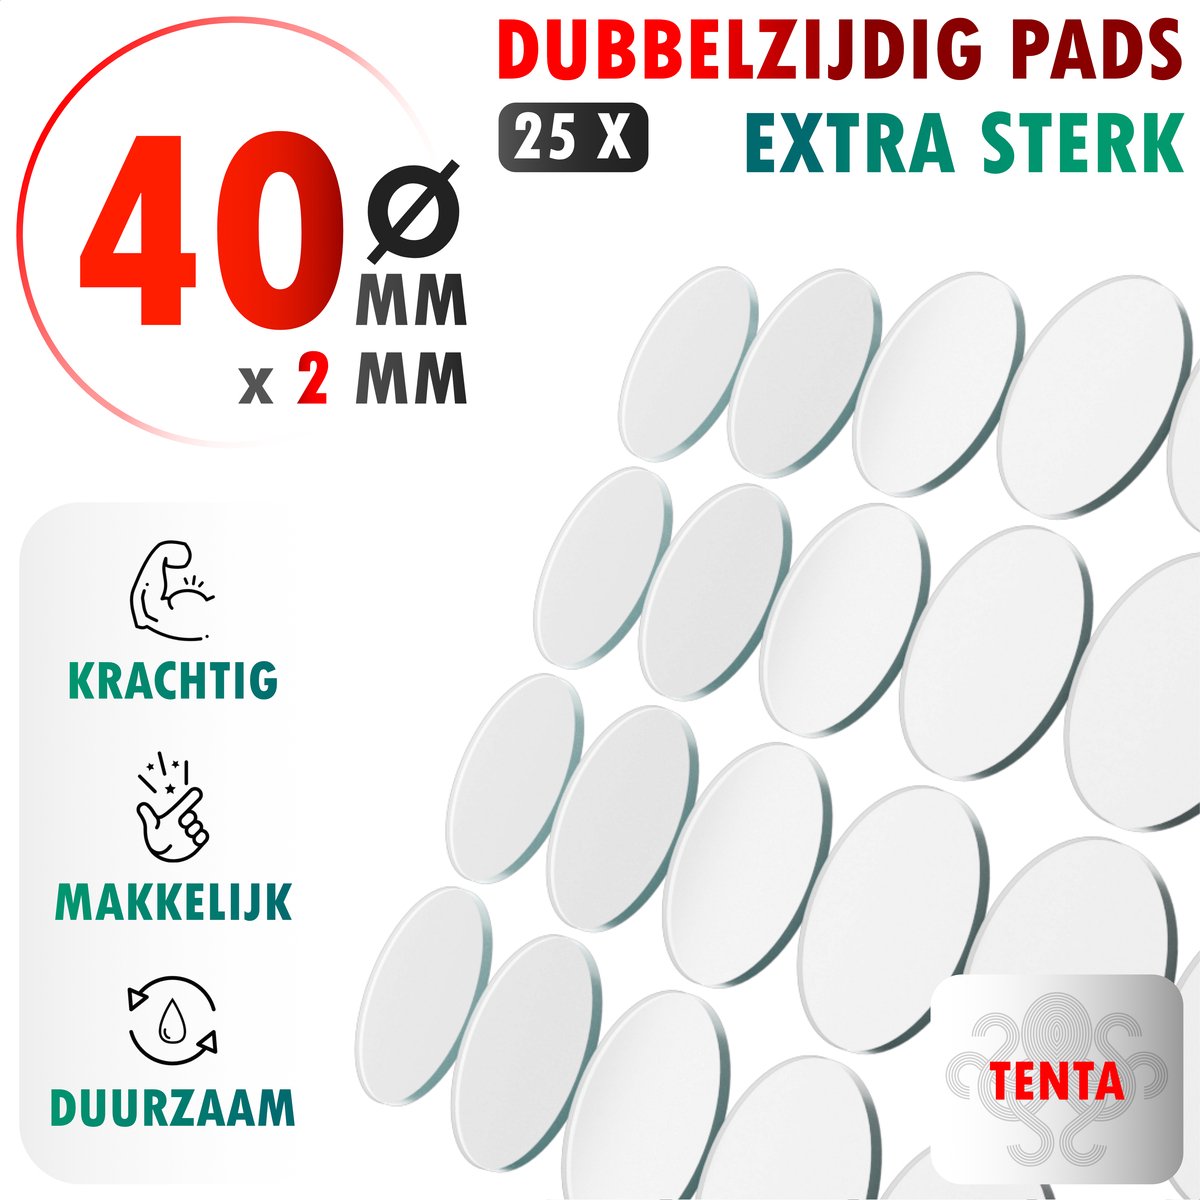 TENTA® Dubbelzijdig Tape Plakkers Extra Sterk - 40mm x 2mm - 25x - TENTA®